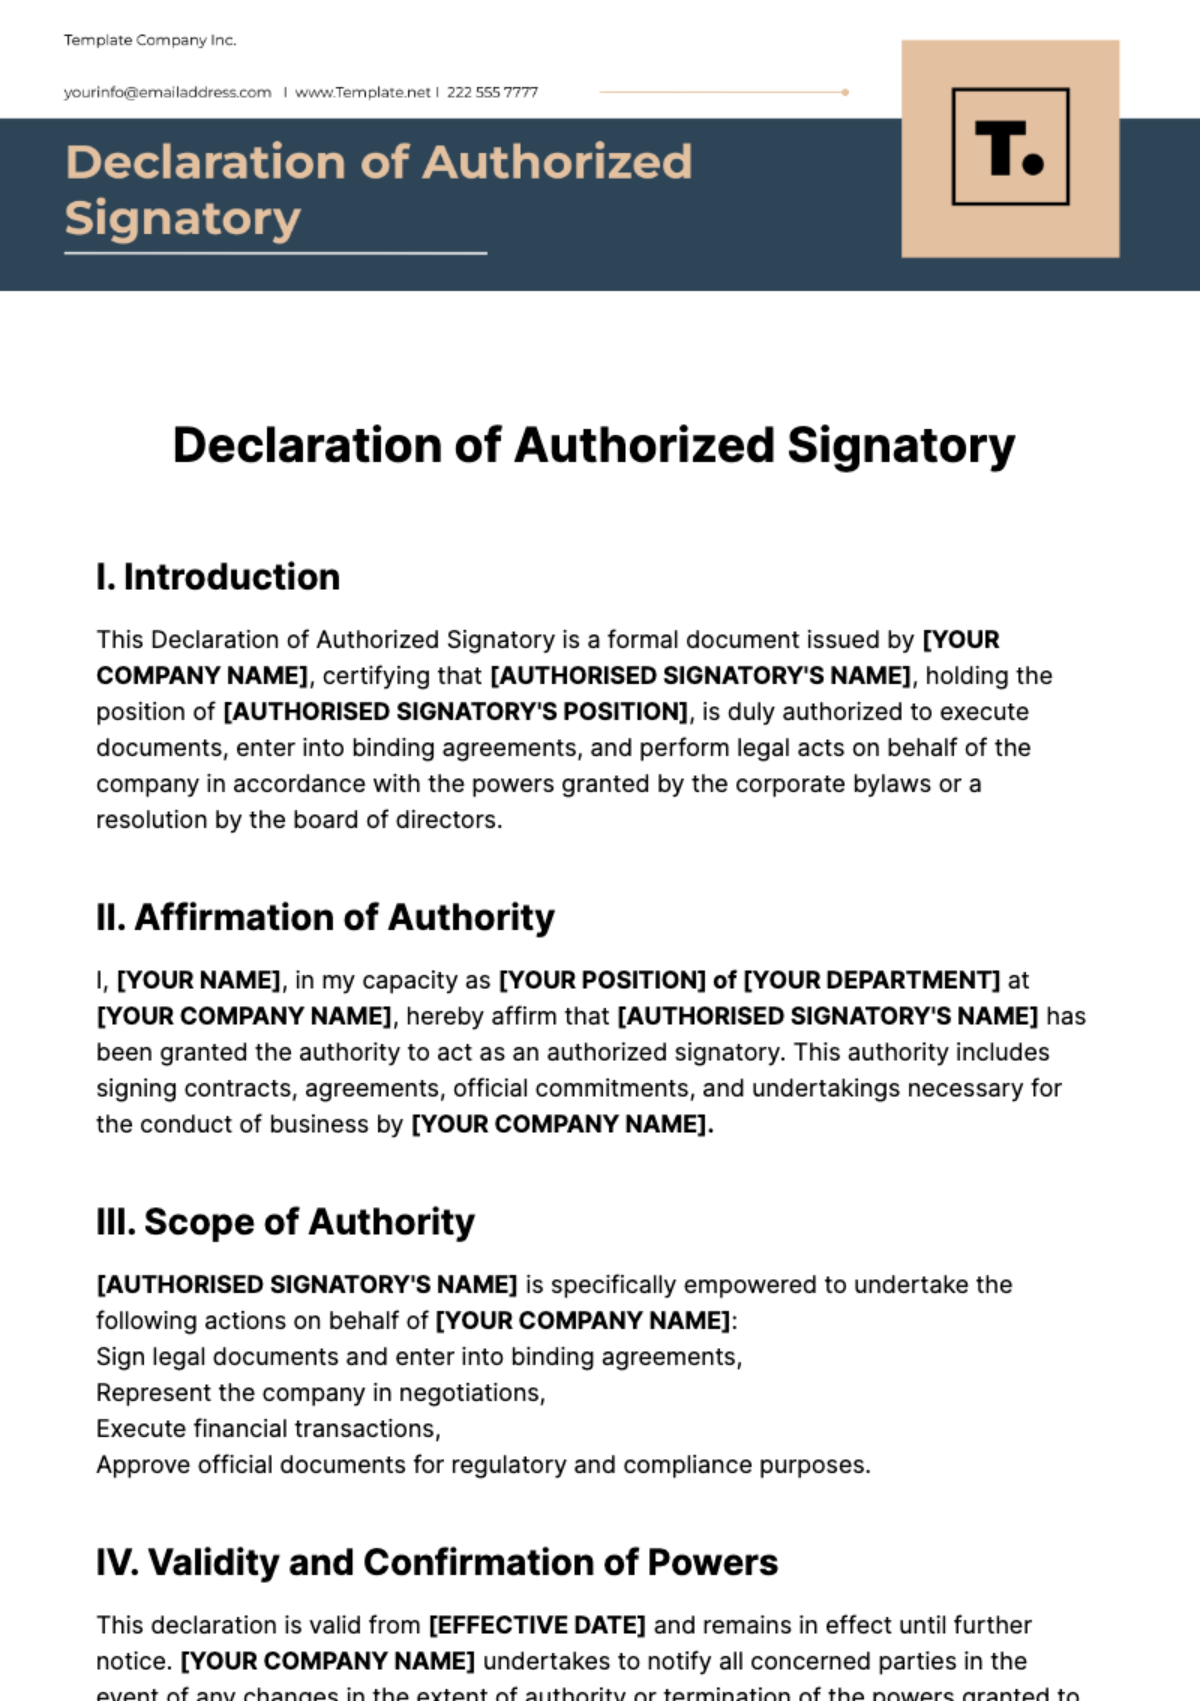 Declaration of Authorized Signatory Template